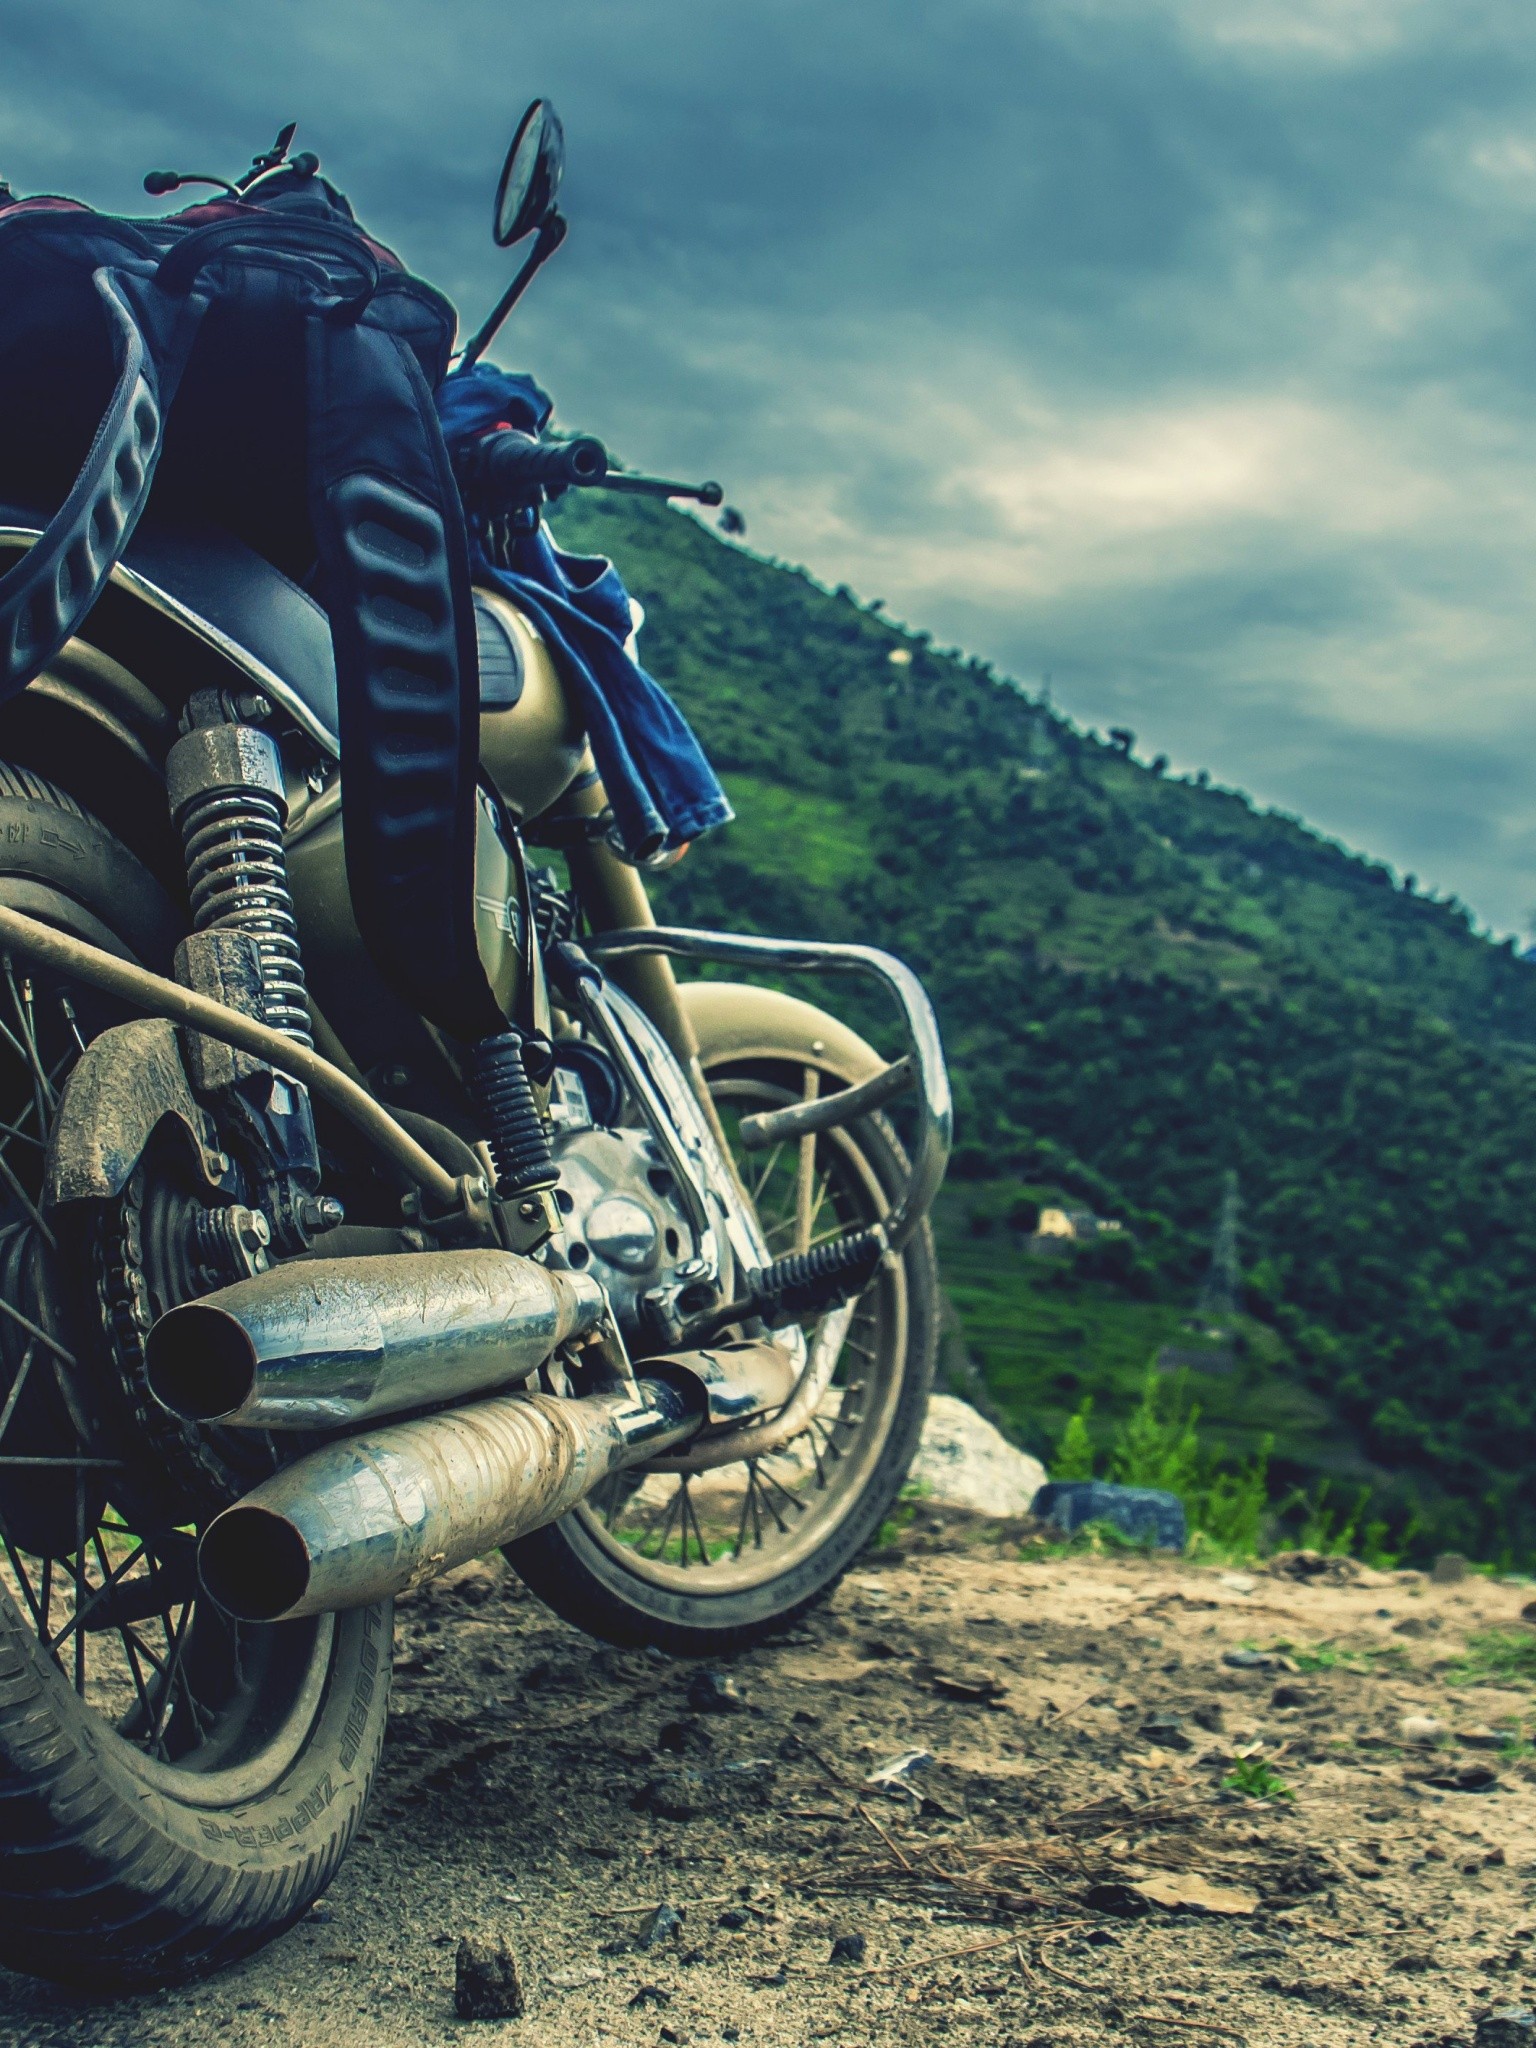 moto handy hintergrundbilder,kraftfahrzeug,fahrzeug,motorrad,motorrad fahren,auto